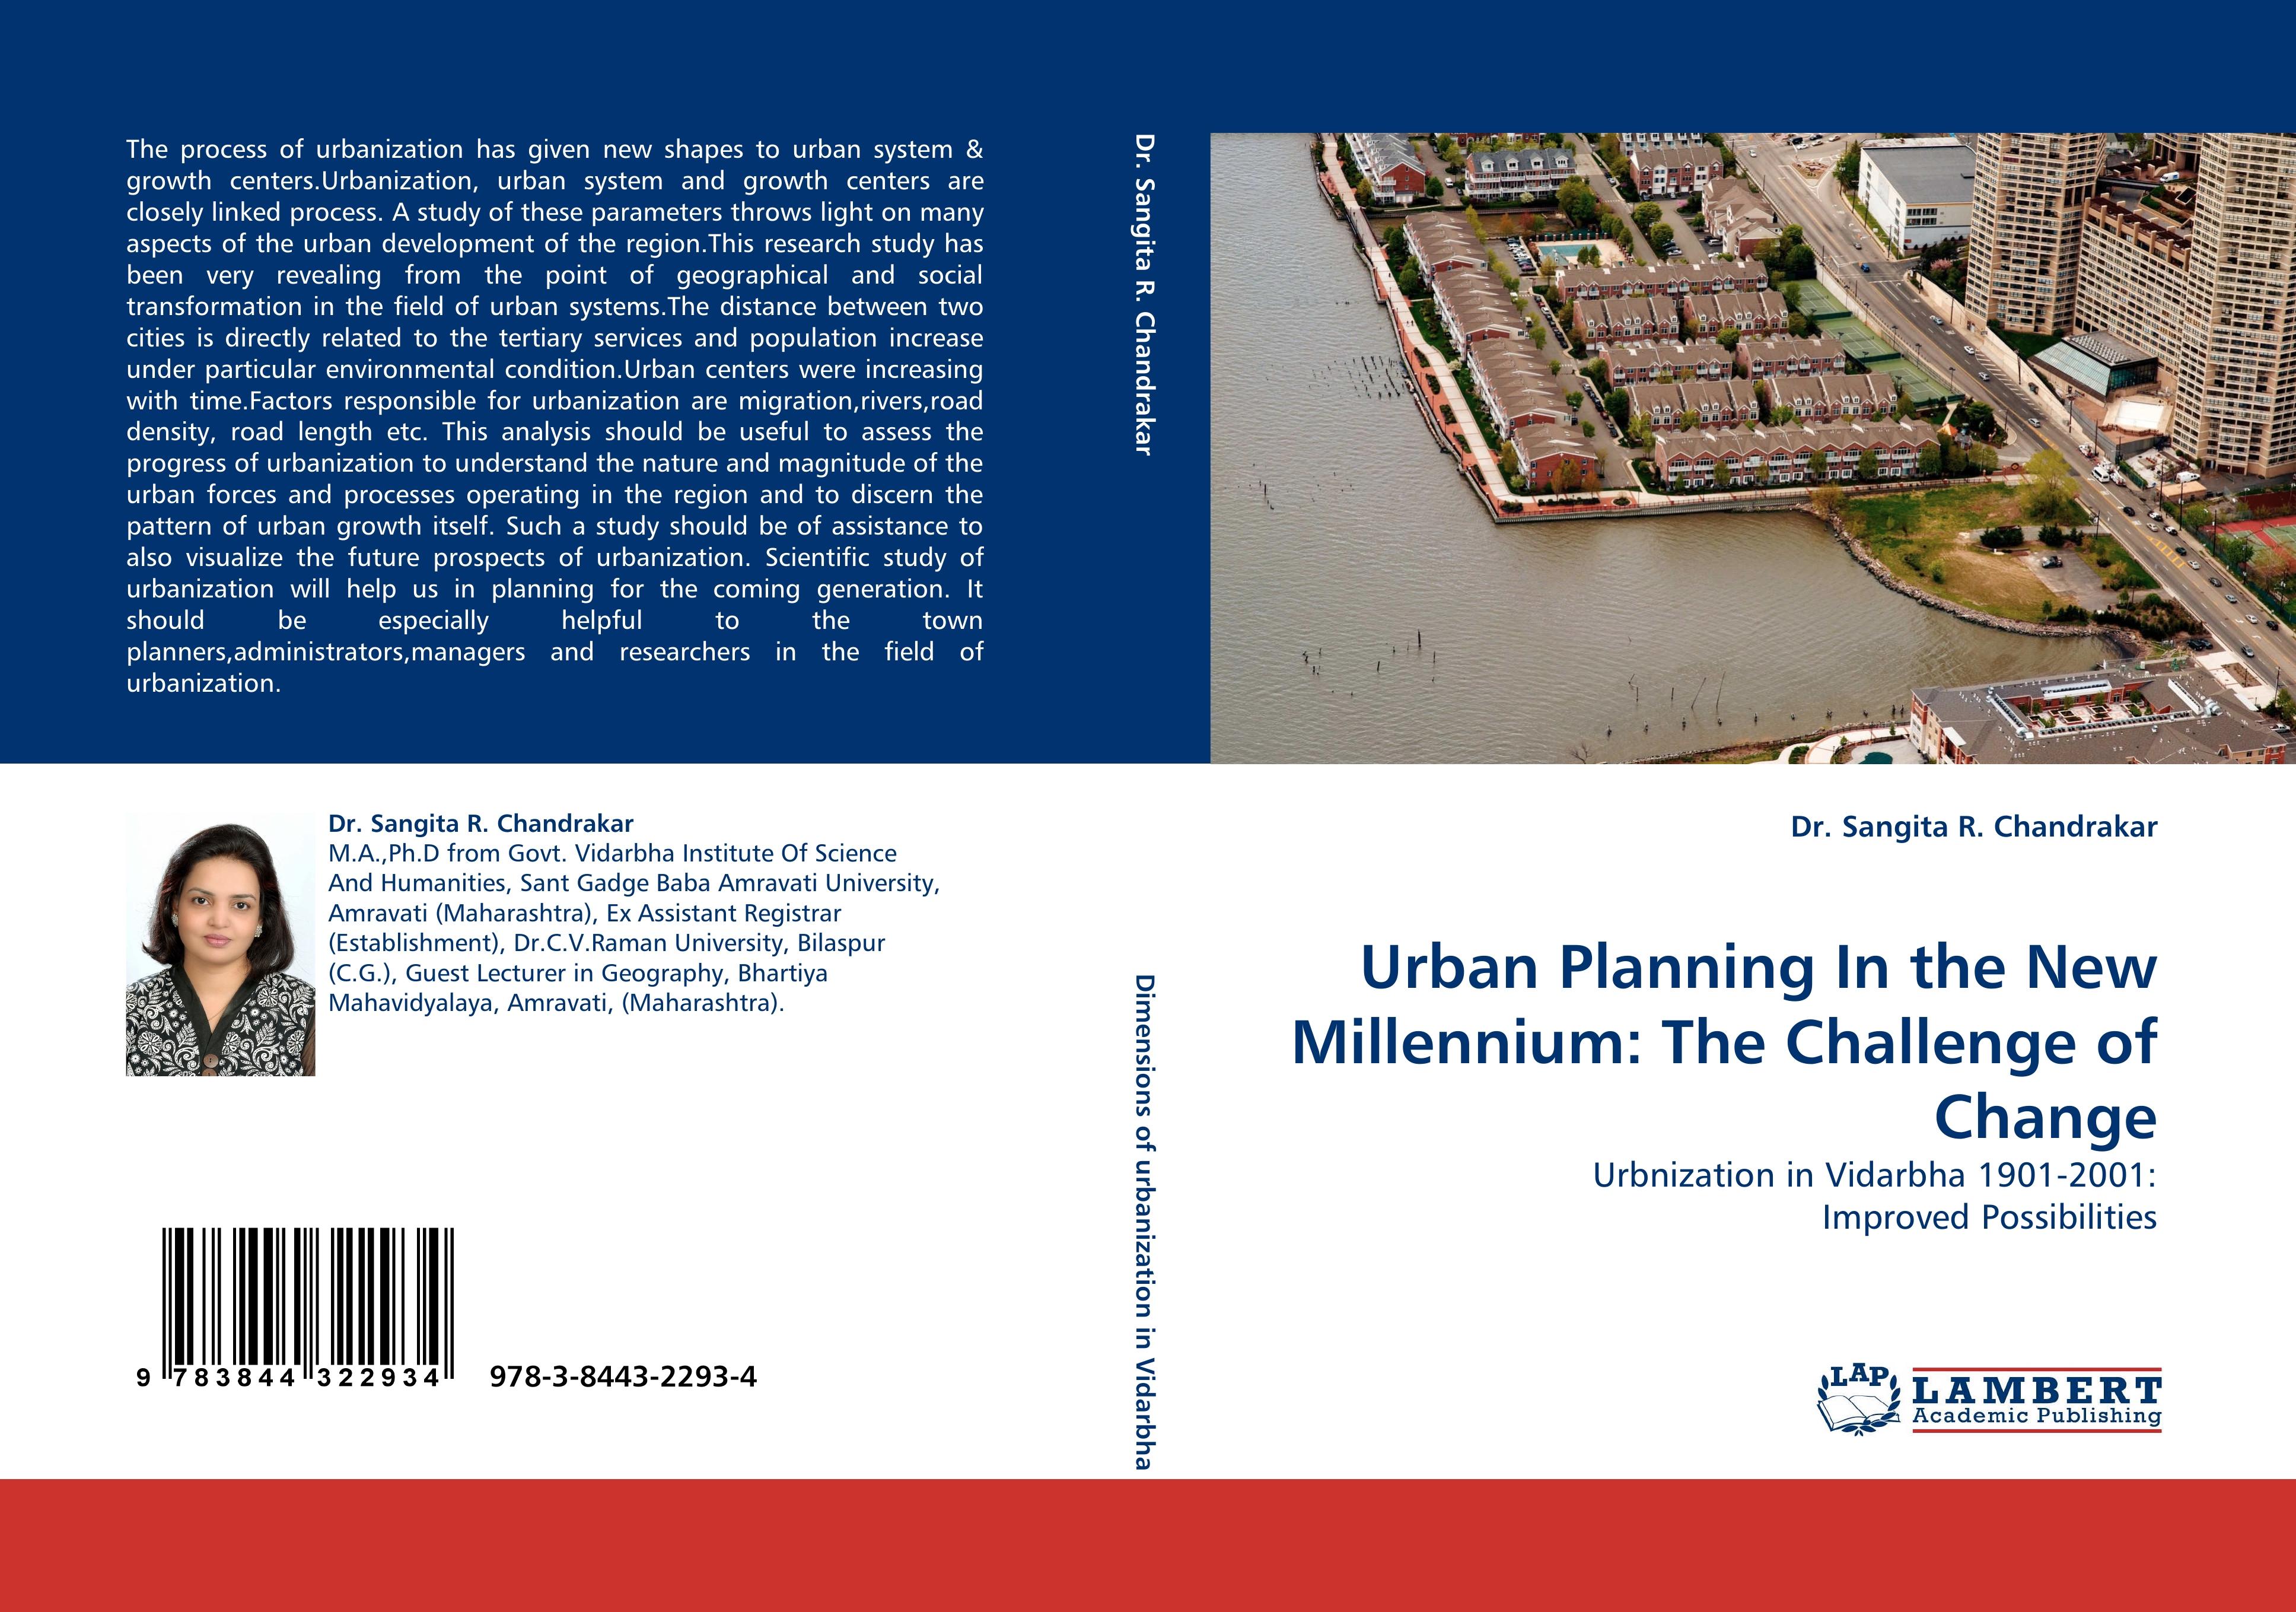 Urban Planning In the New Millennium: The Challenge of Change - Dr. Sangita R. Chandrakar